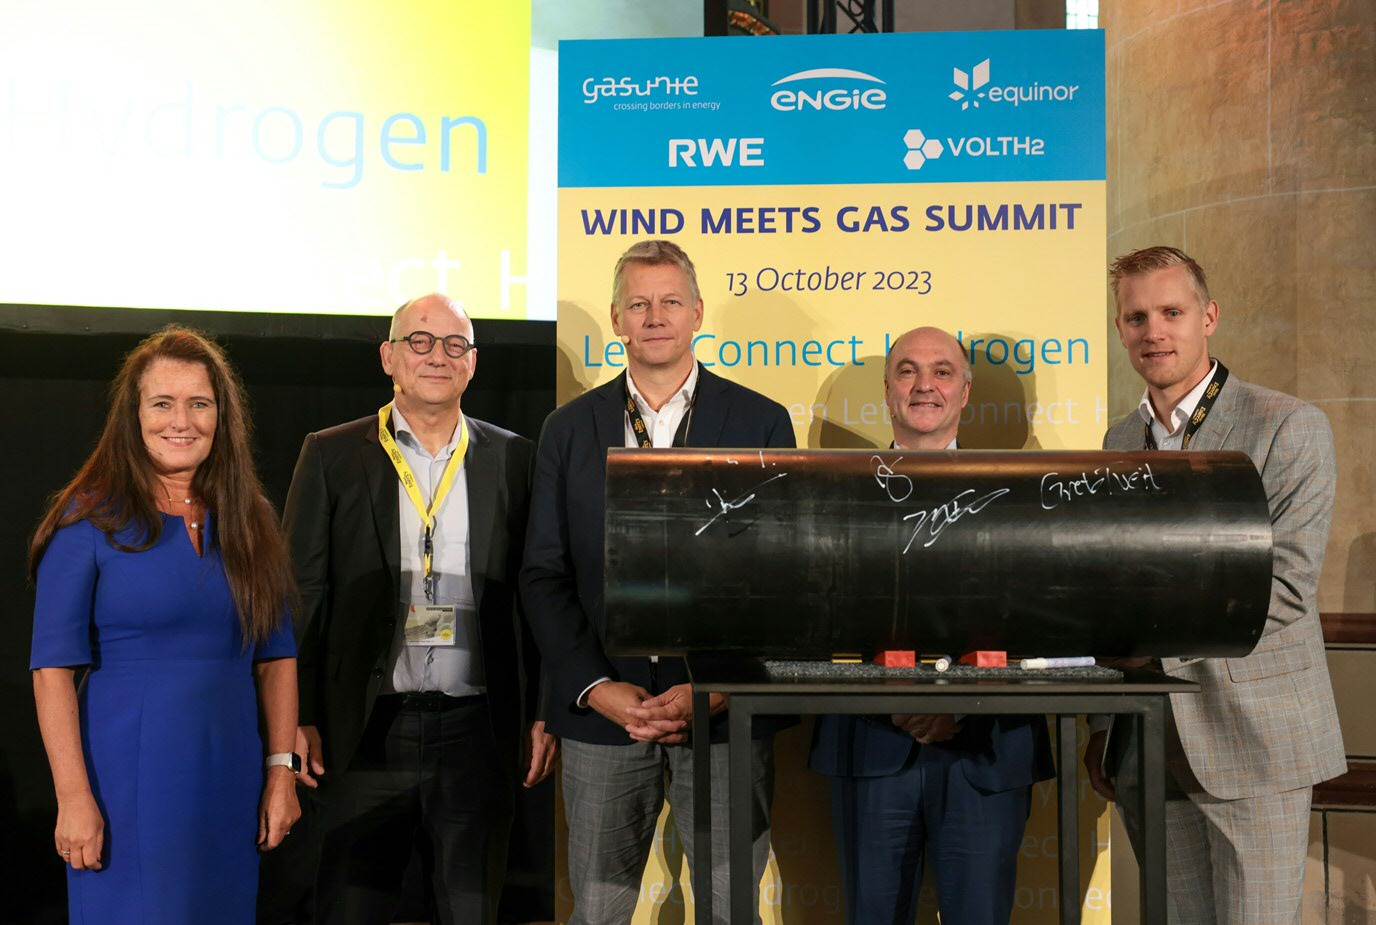 V.l.n.r. Grete Tveit (Equinor), Roger Miesen (RWE), Pierre Devillers (Engie), Hans Coenen (Gasunie) en Arjan Schipaanboord (VoltH2)